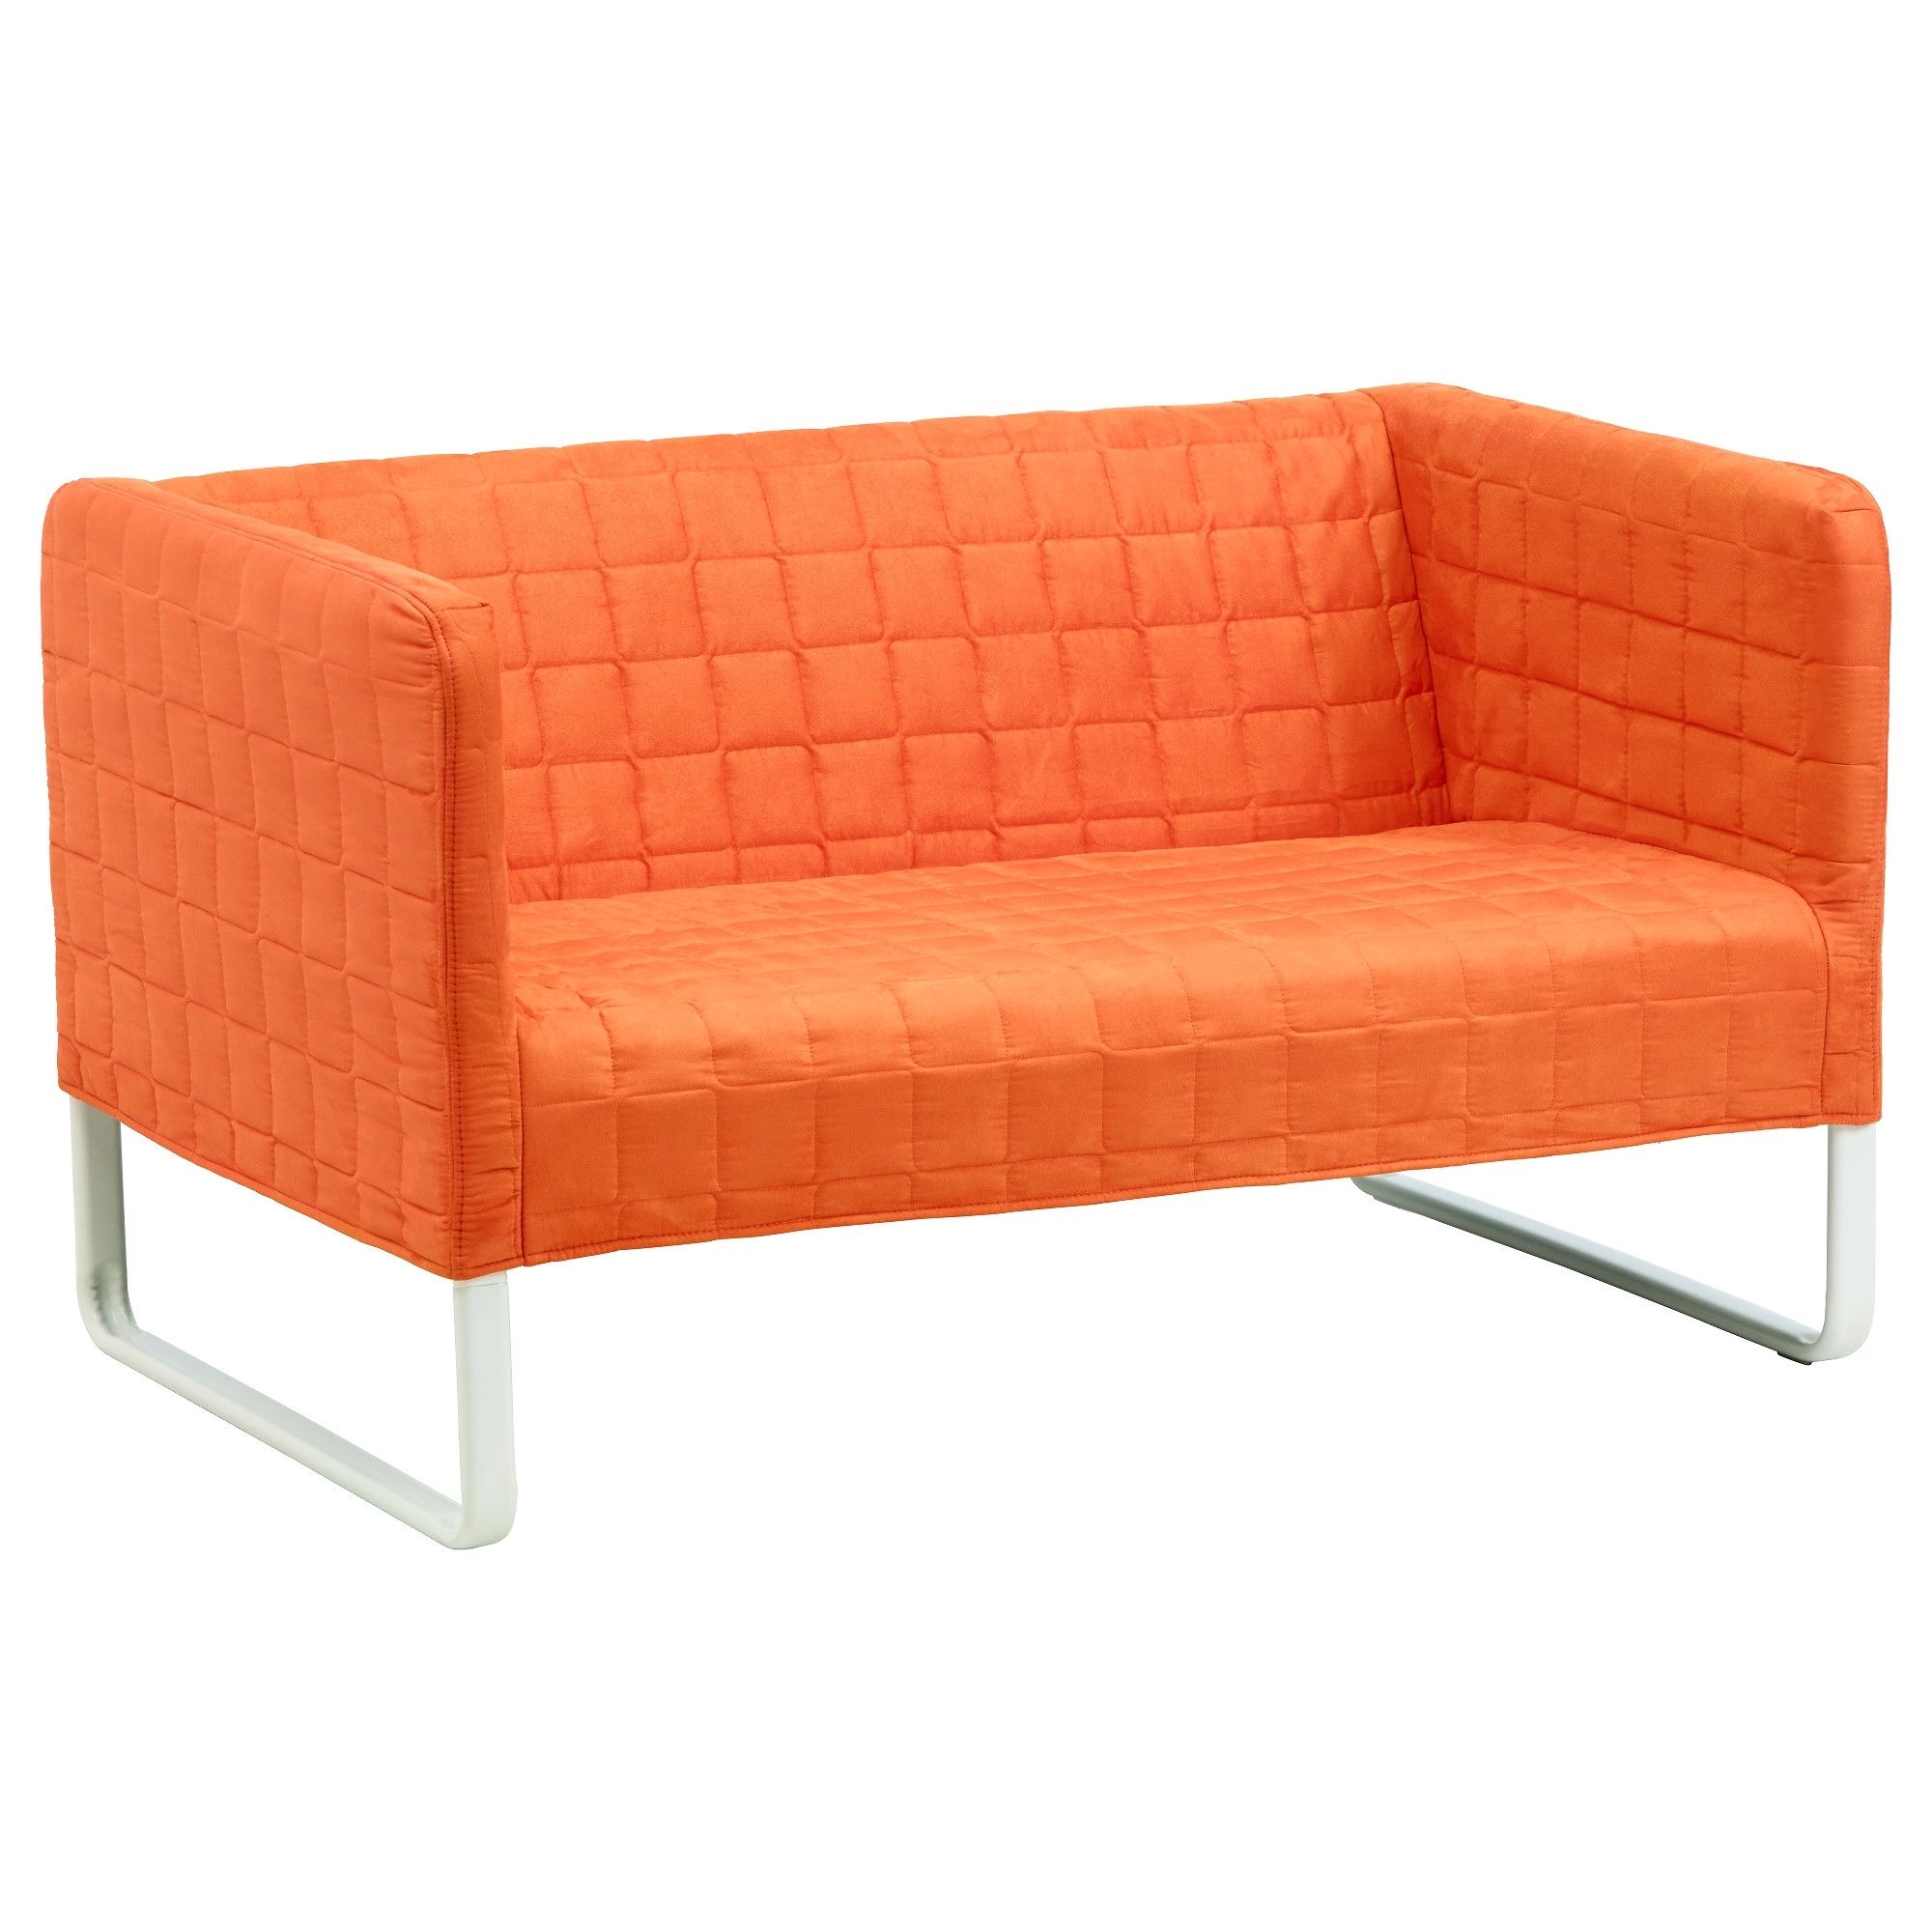 Ikea Small Sofas Regarding Widely Used Knopparp 2 Seat Sofa Orange – Ikea (View 1 of 20)